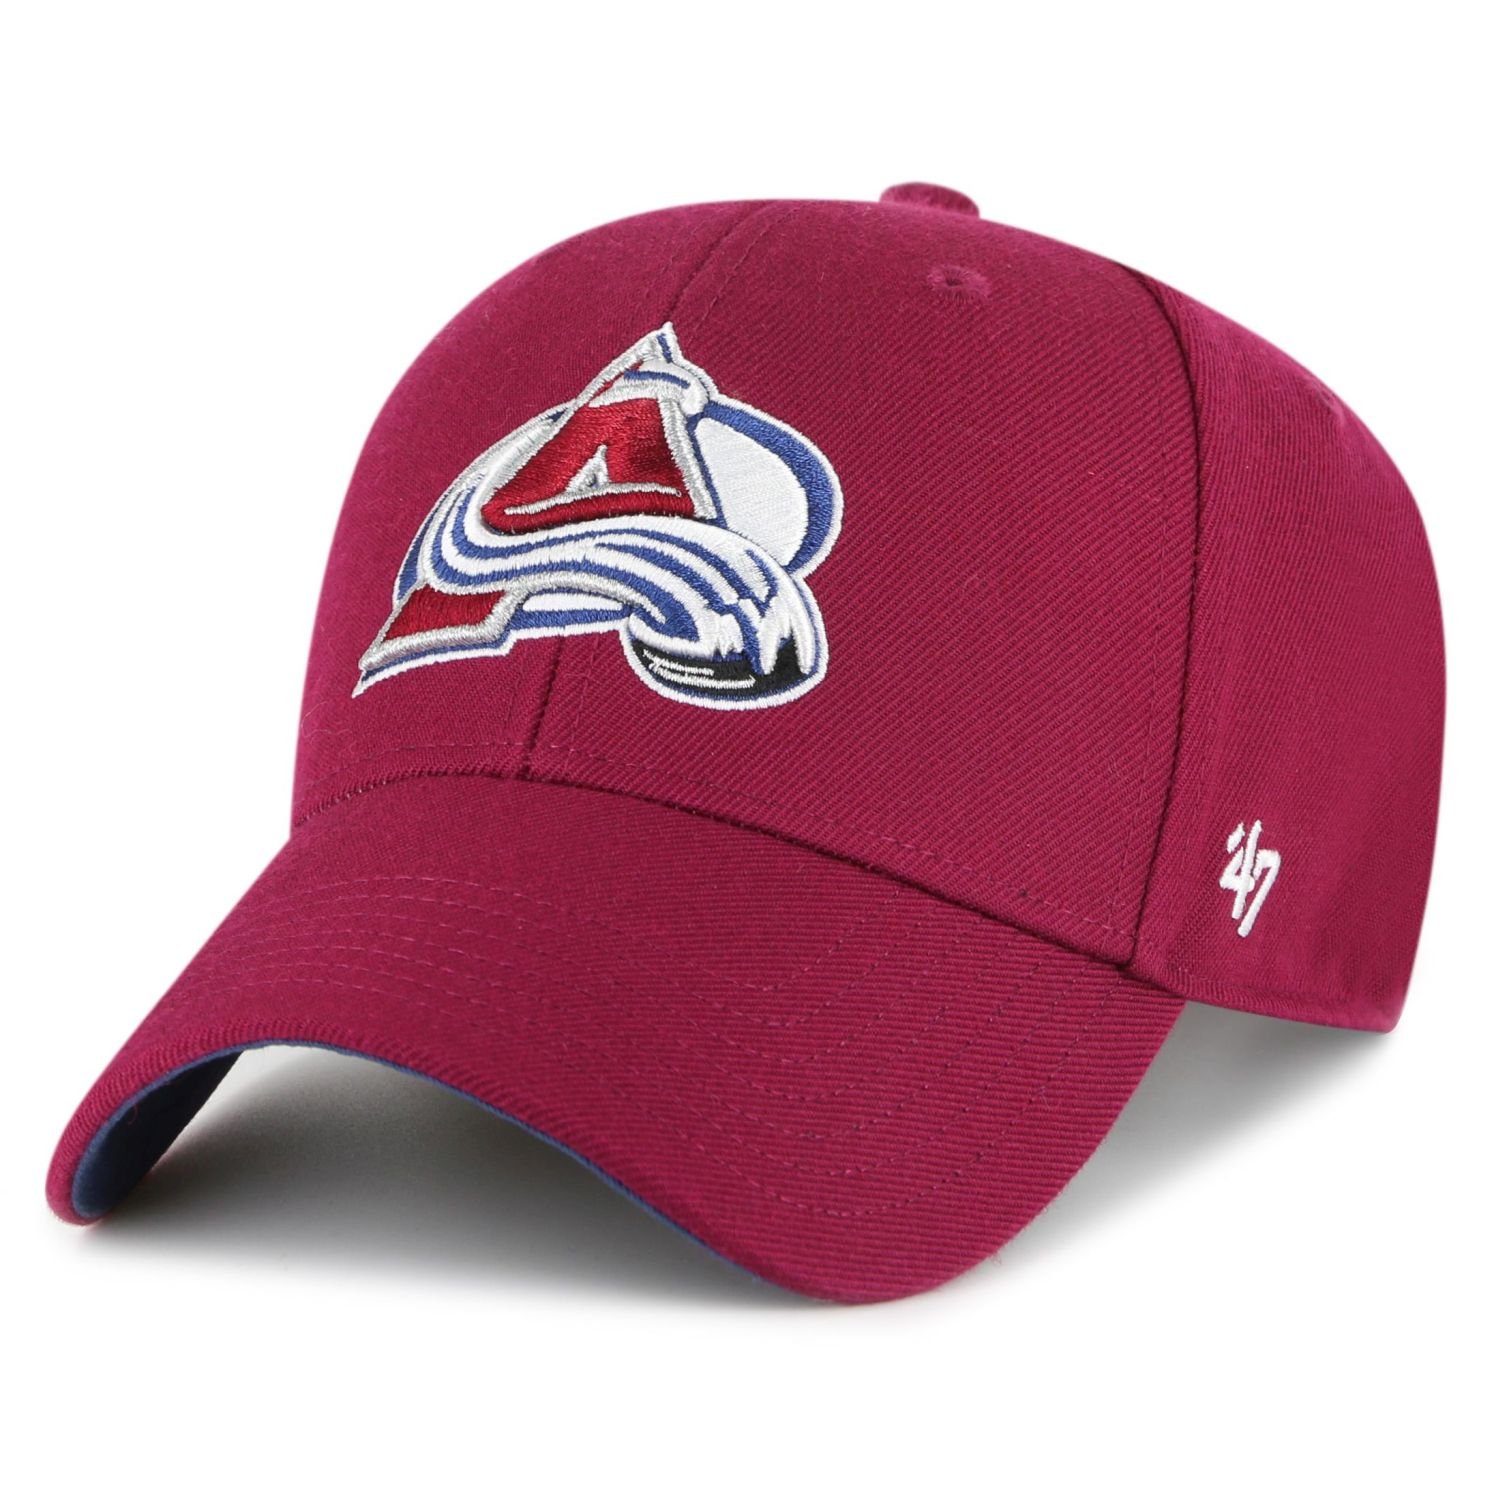 Cap Colorado NHL Brand Snapback Curved 47 Avalanche